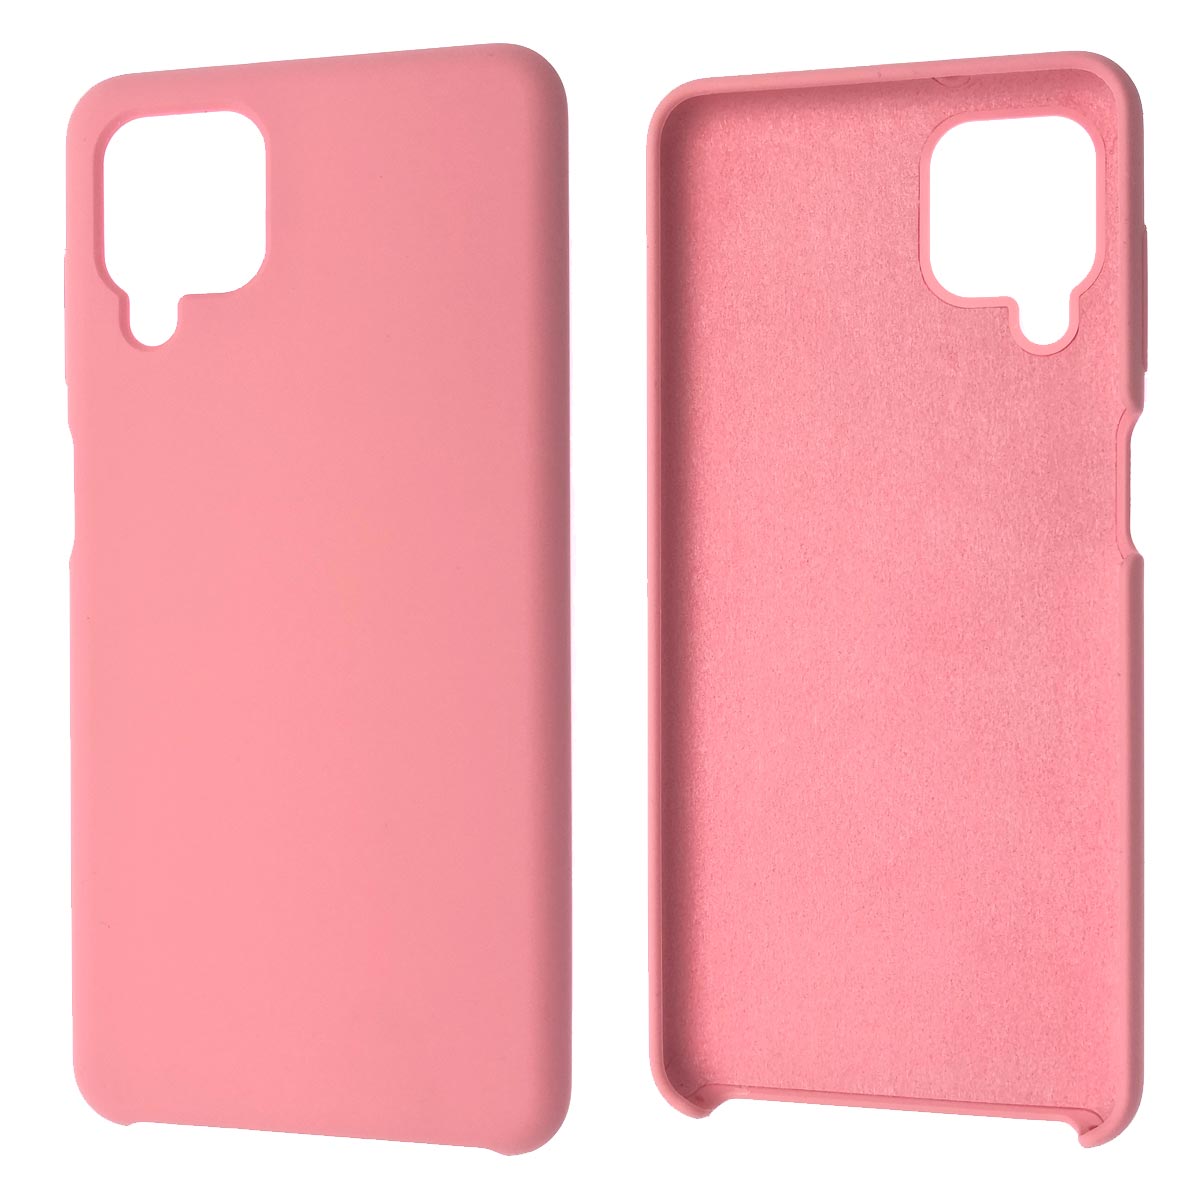 Чехол накладка Silicon Cover для SAMSUNG Galaxy A12 (SM-A125), силикон, бархат, цвет розовый